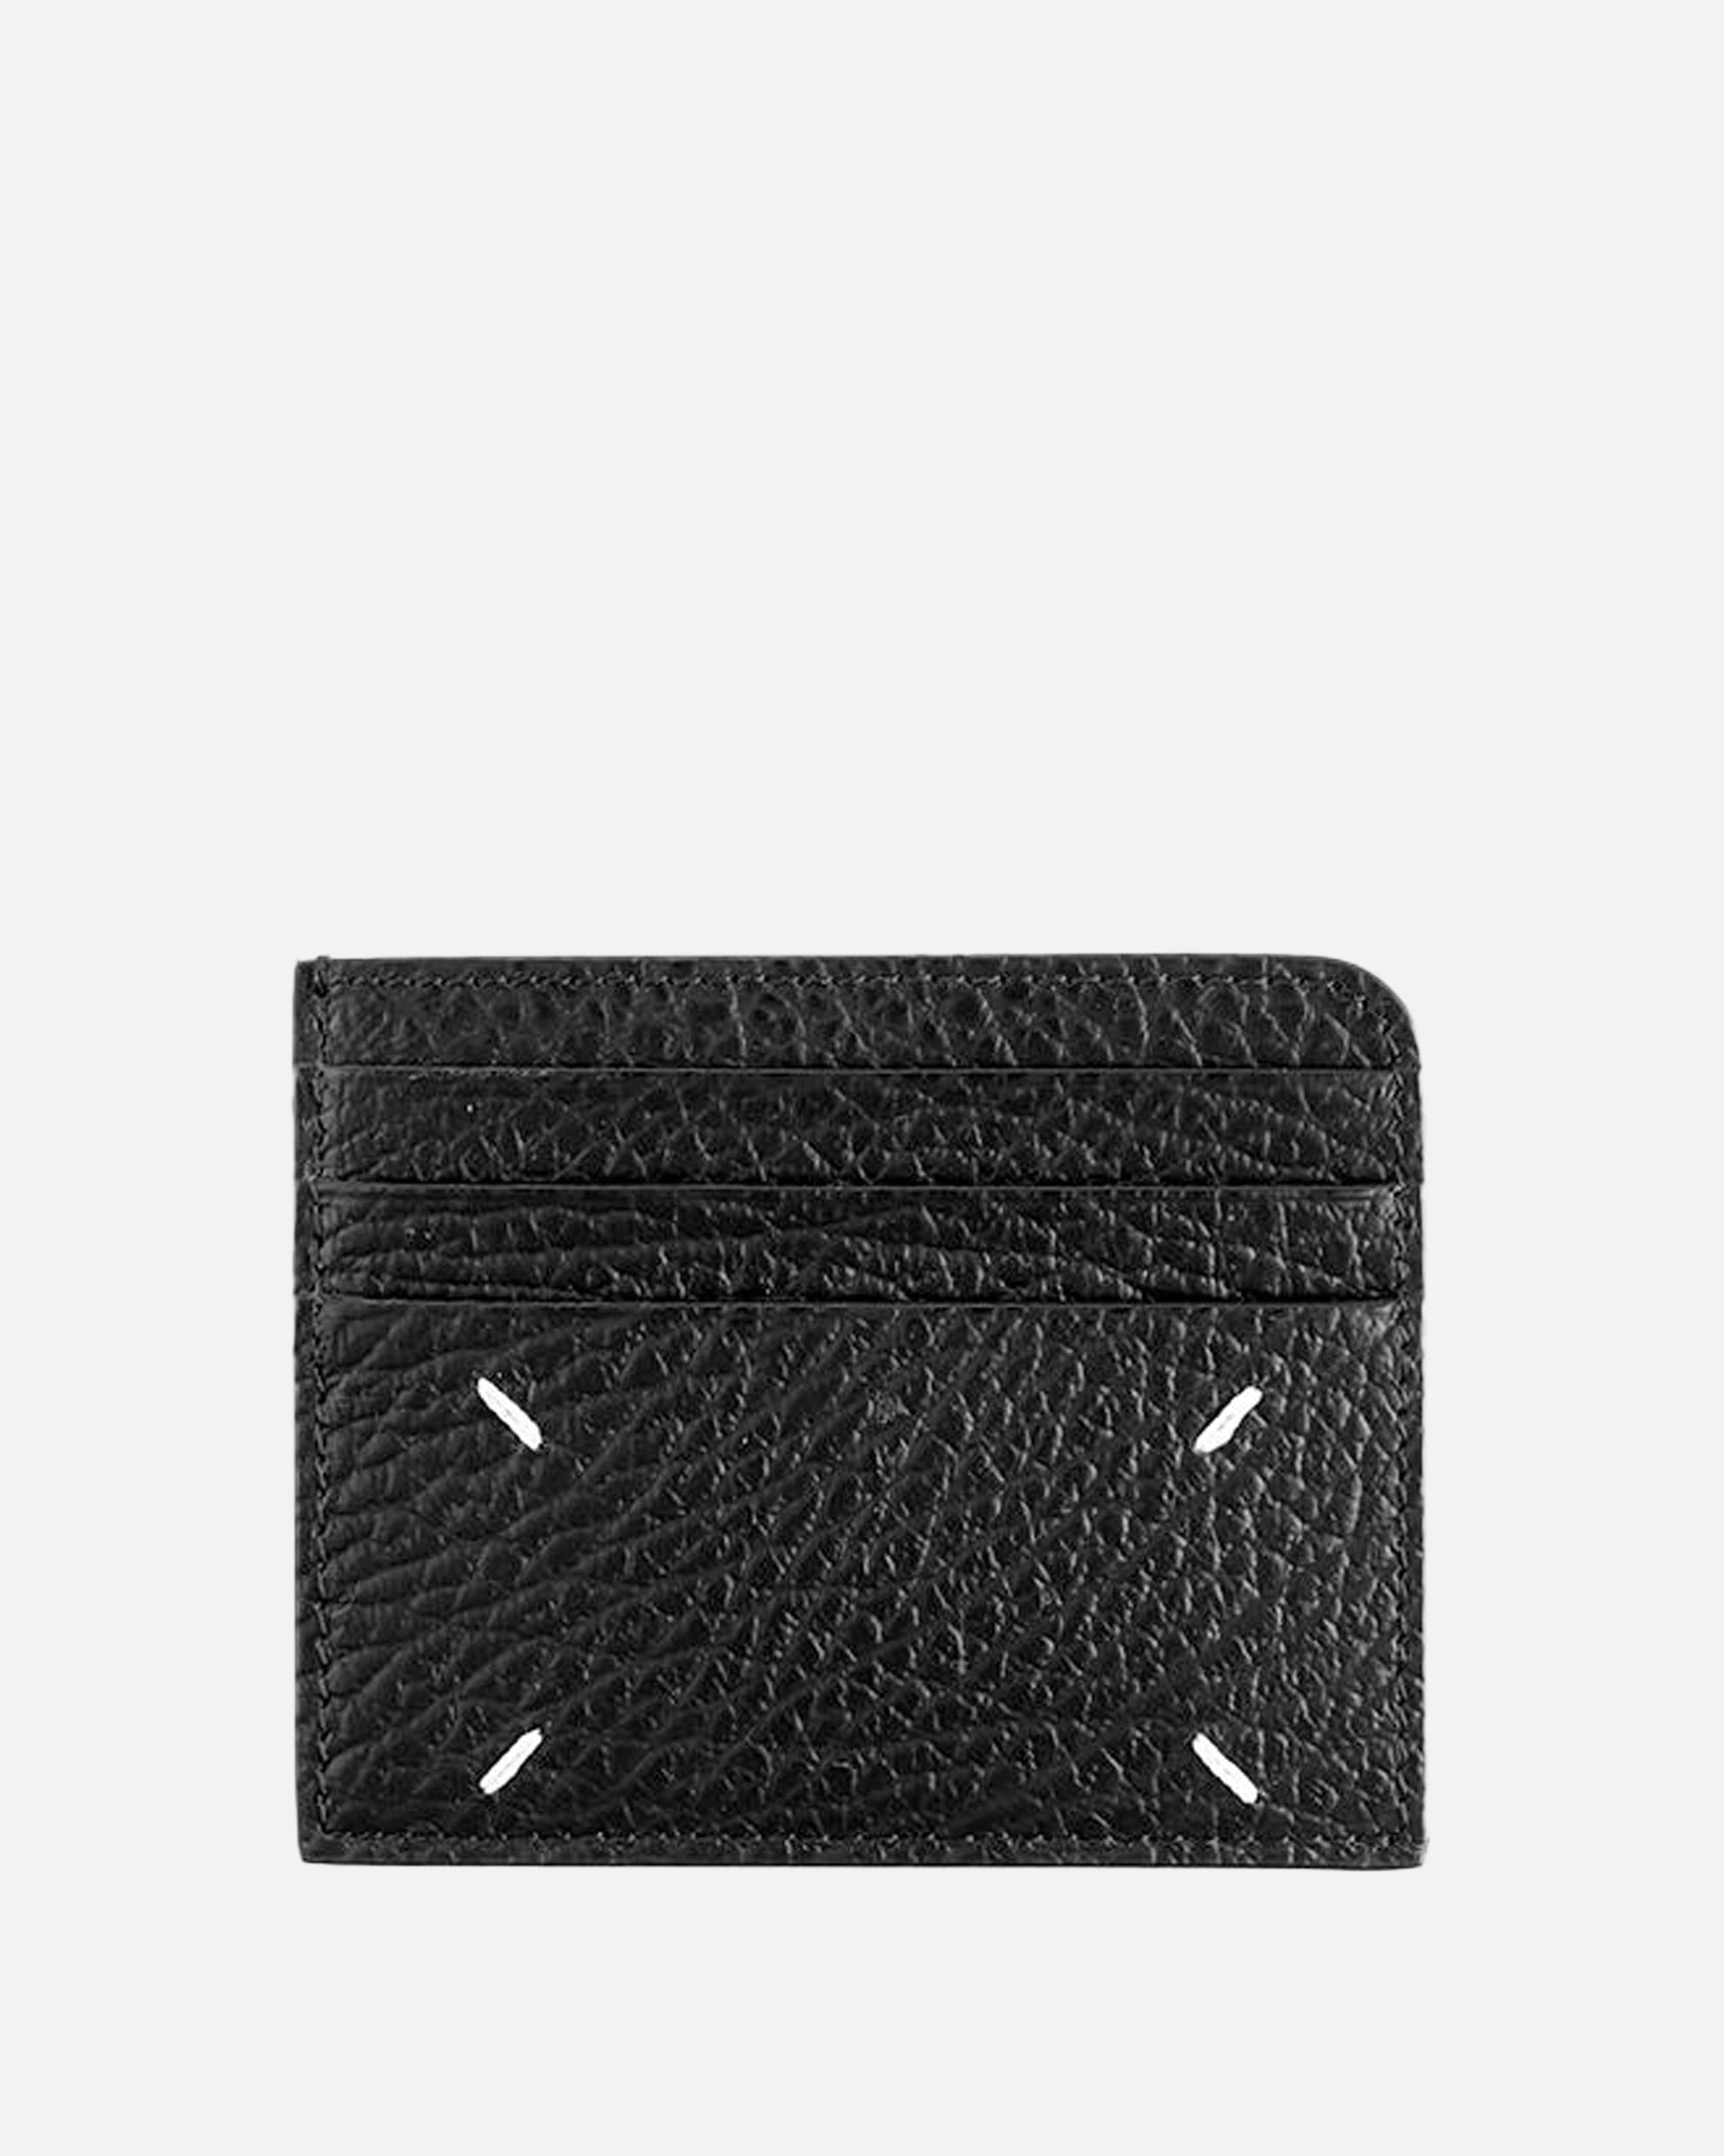 Maison Margiela Leather Goods Pebbled Leather Cardholder in Black